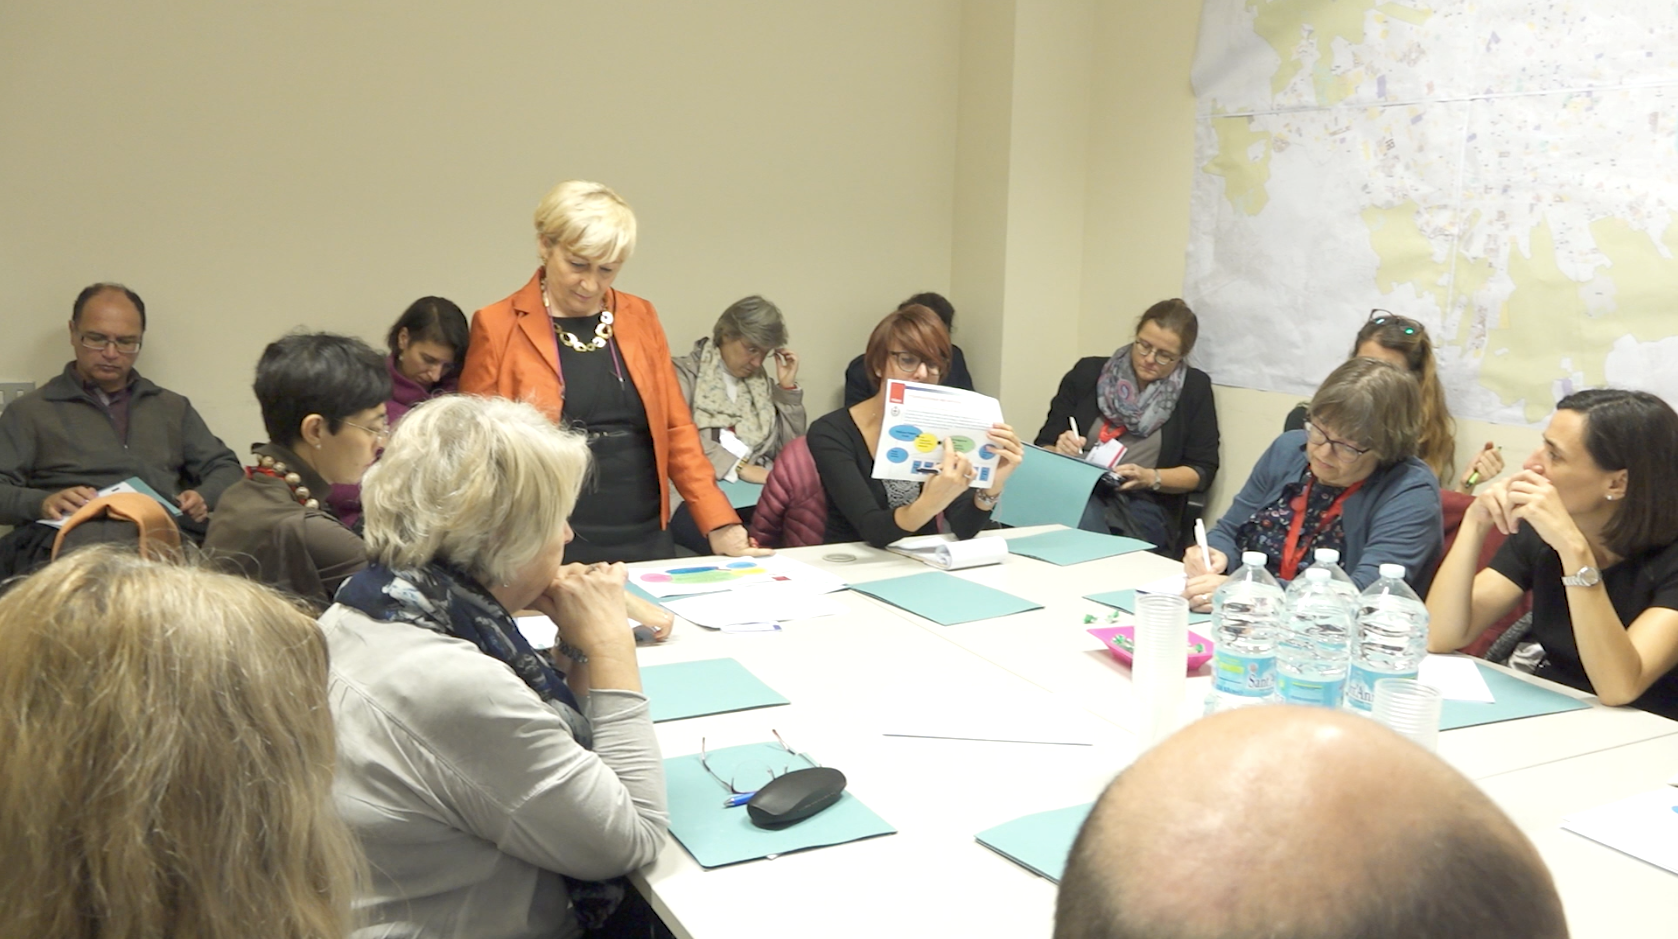 Video of the Solidarity Cities study visit in Milan 8-9 November 2018